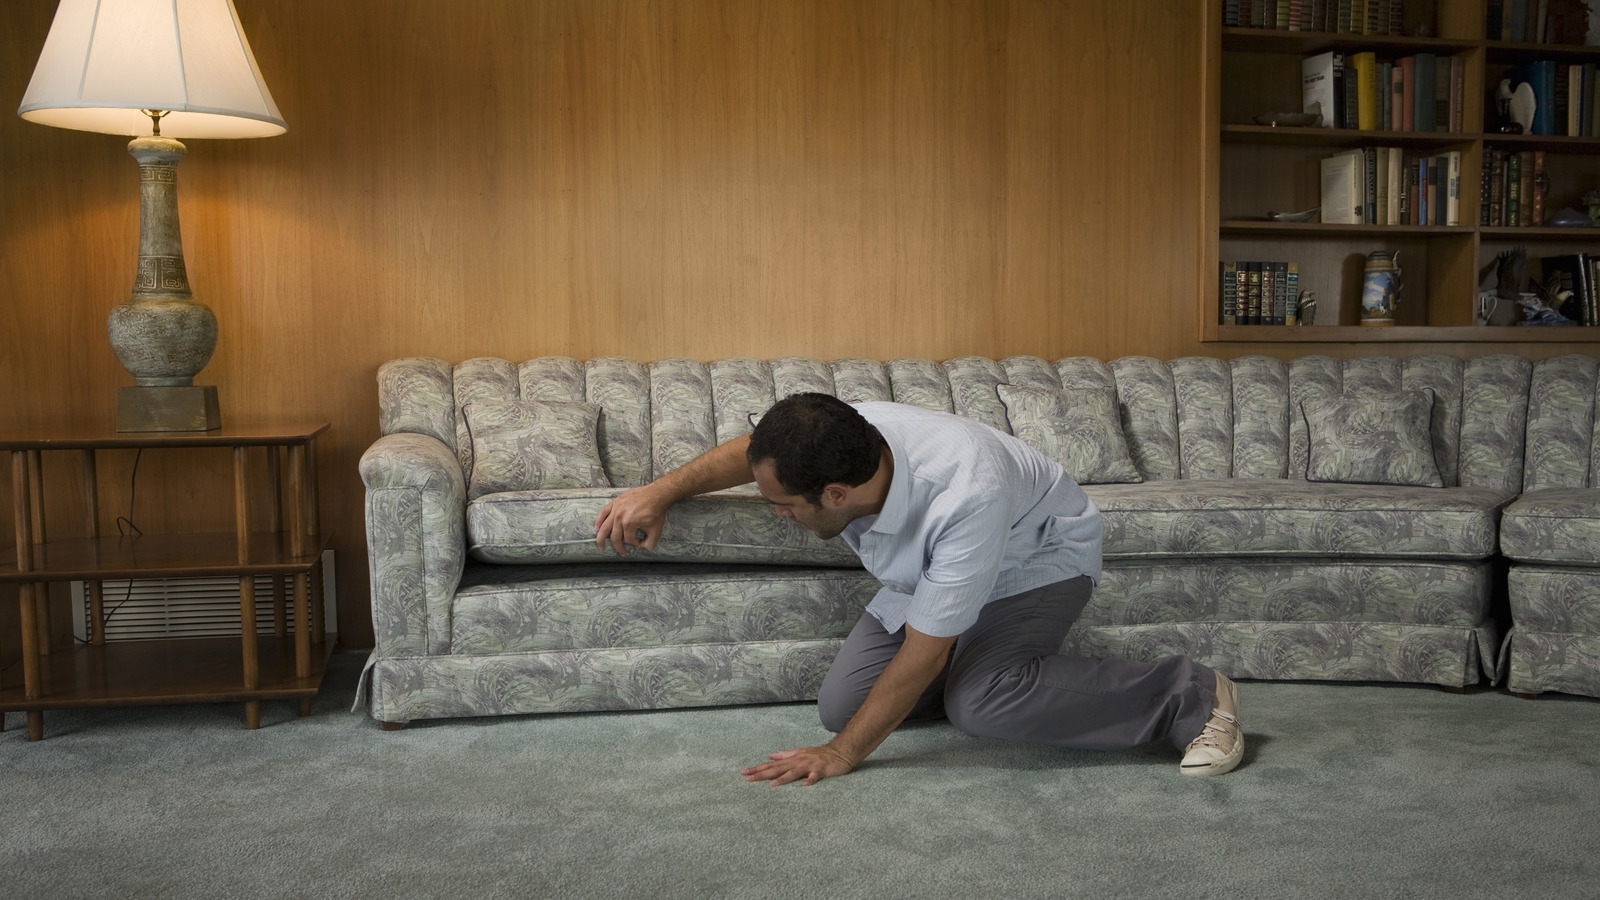 Couch Velcro